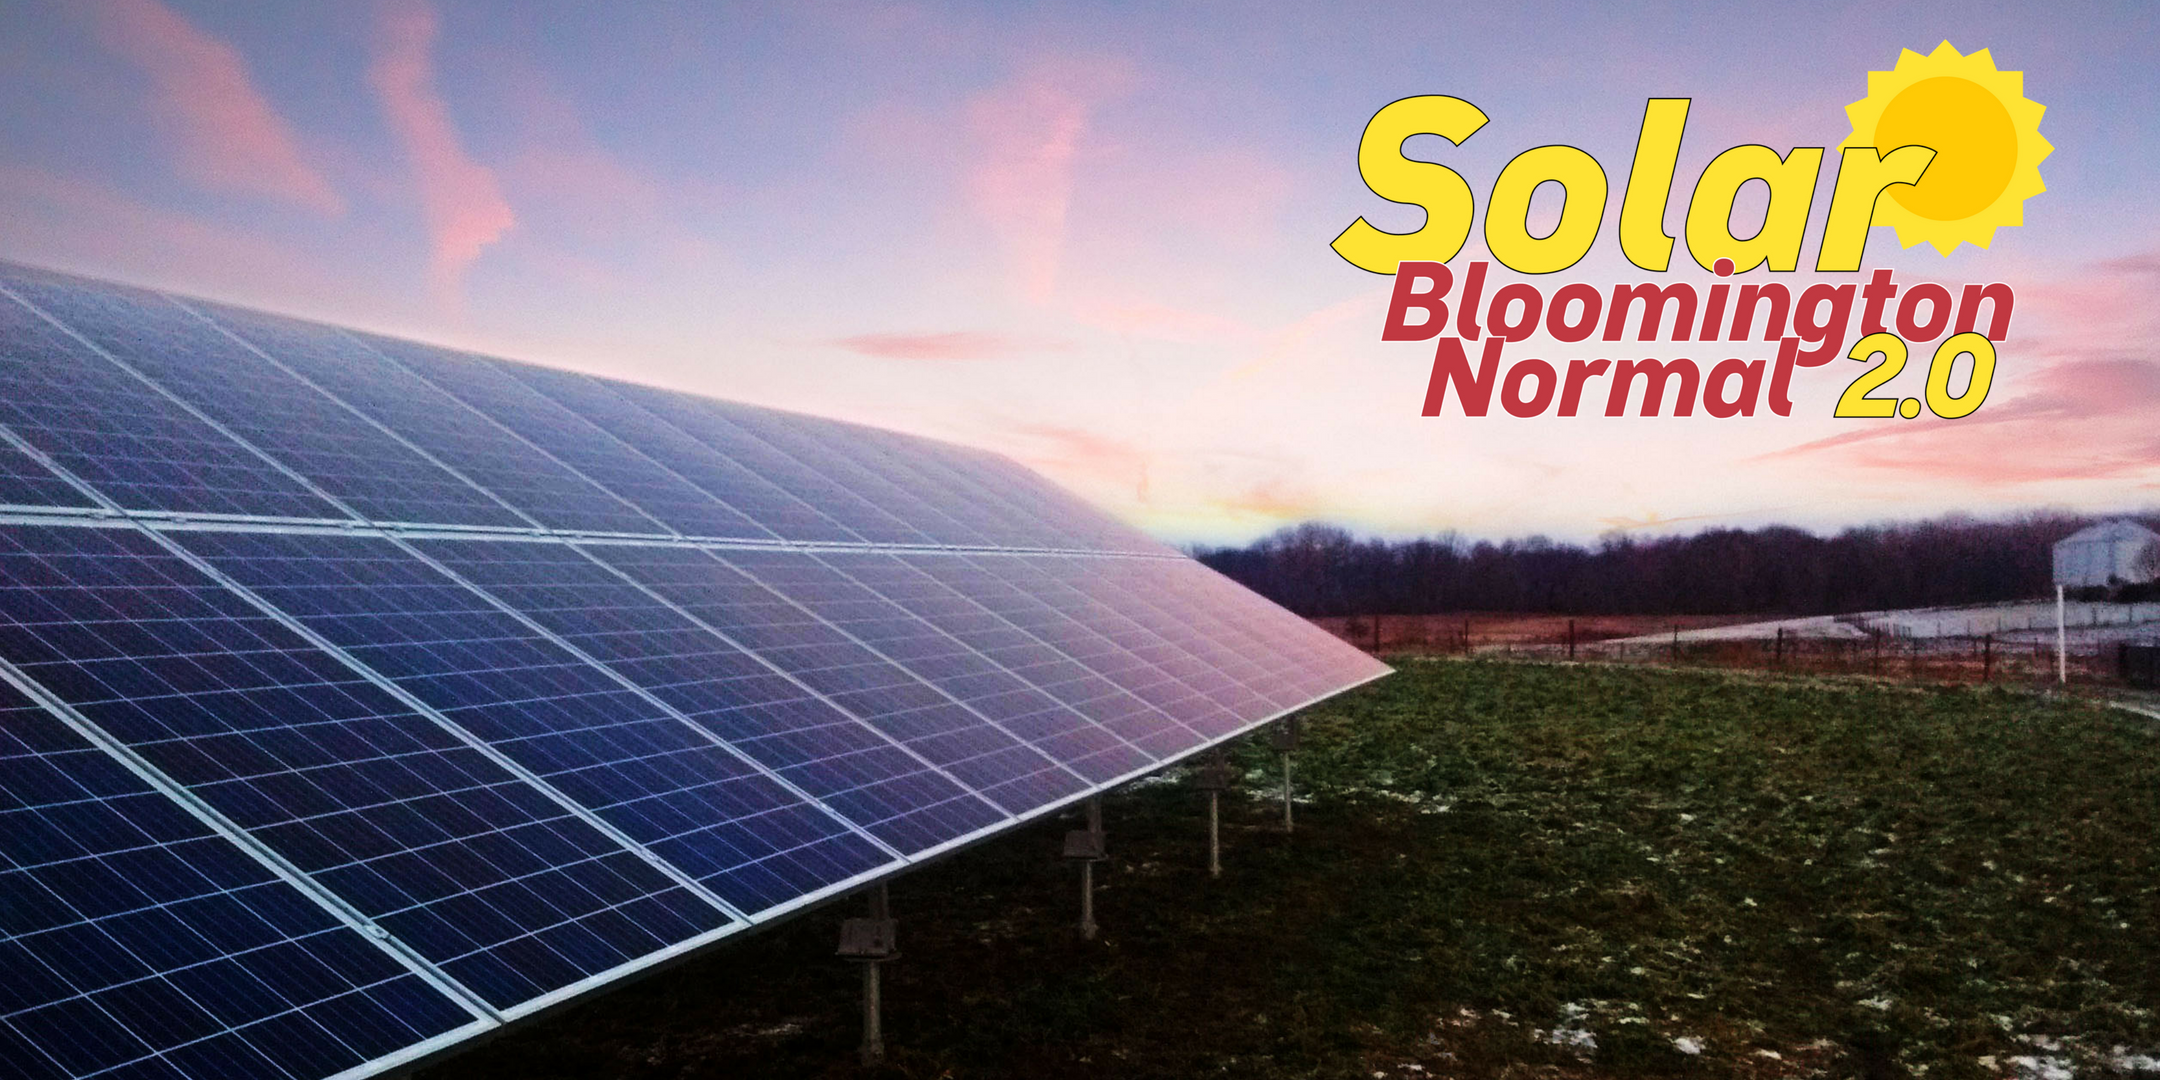 Solar Bloomington-Normal 2.0 Solar Power Hour 7/18 - Interstate Center, presented by the McLean Co Farm Bureau